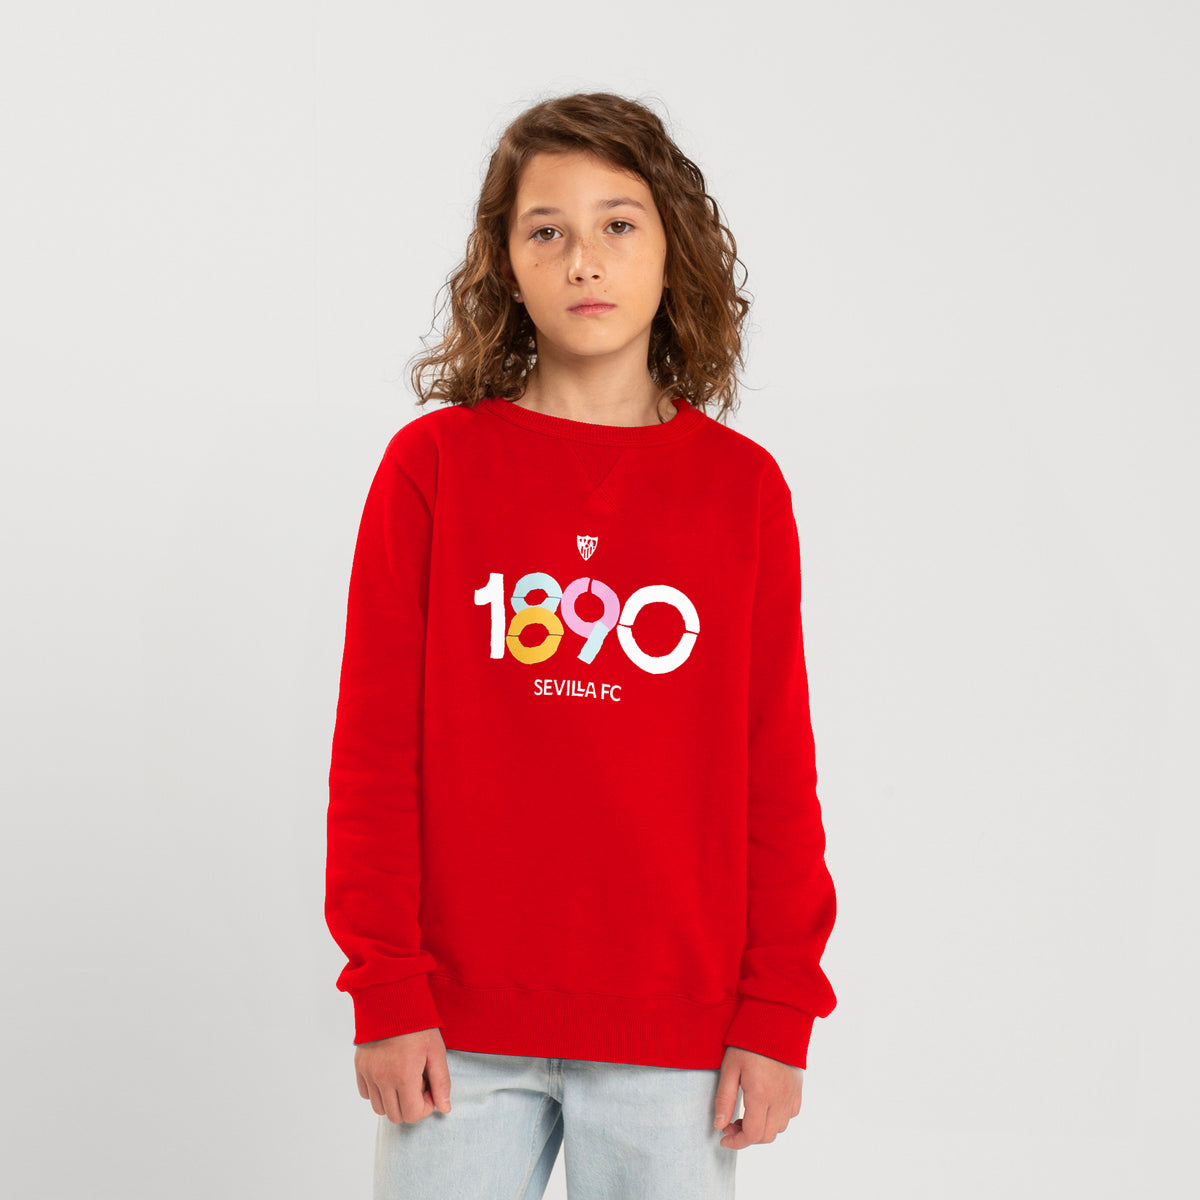 Kids' Red sweatshirt 1890 23/24